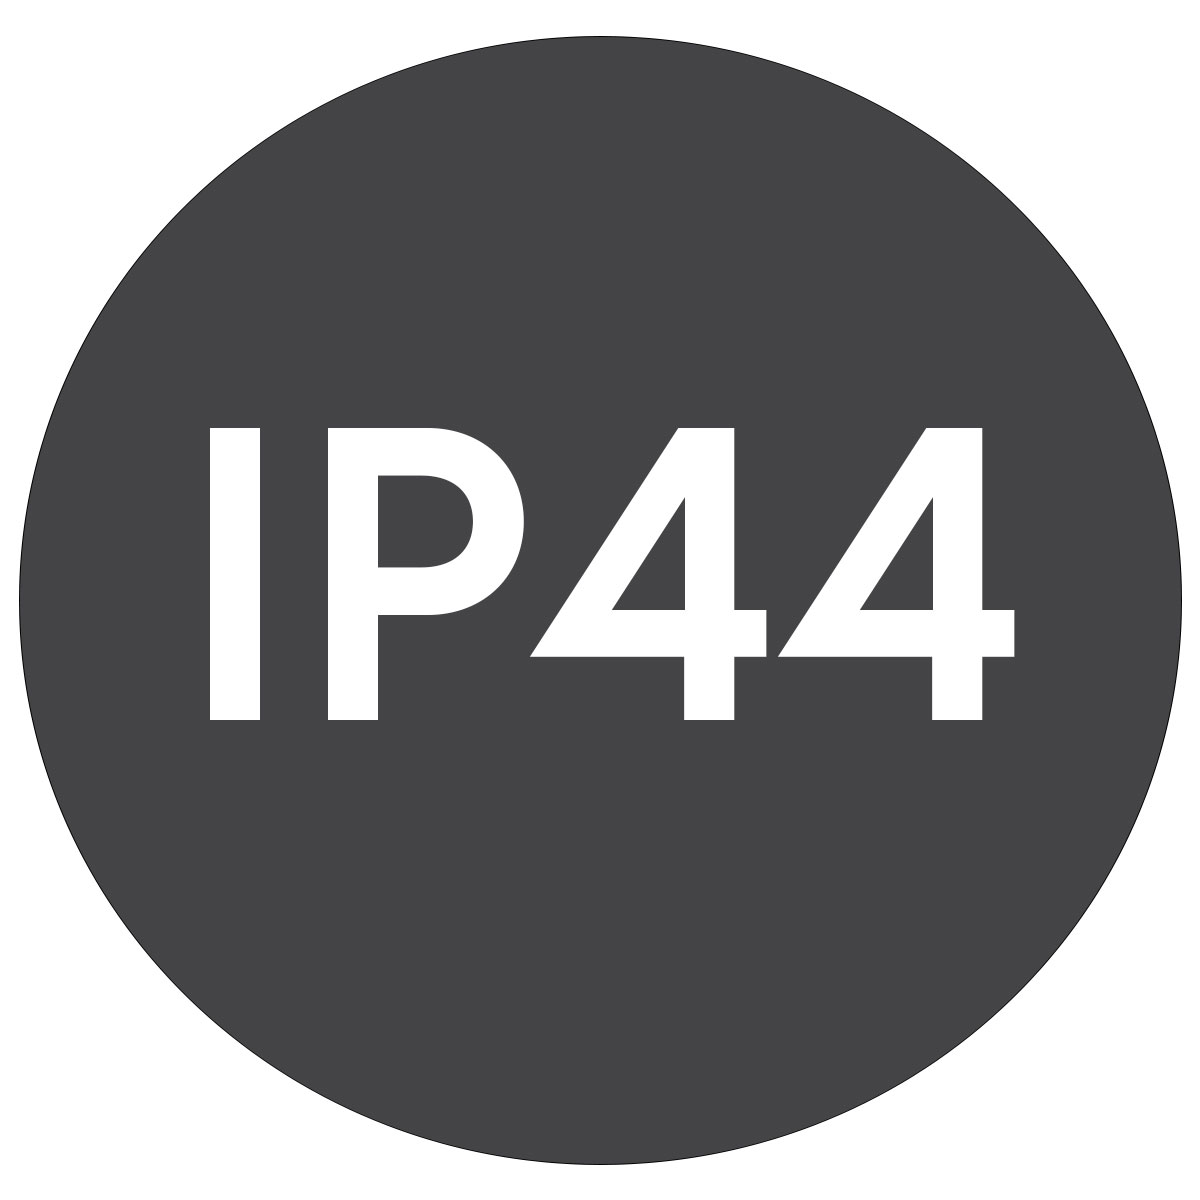 IP44